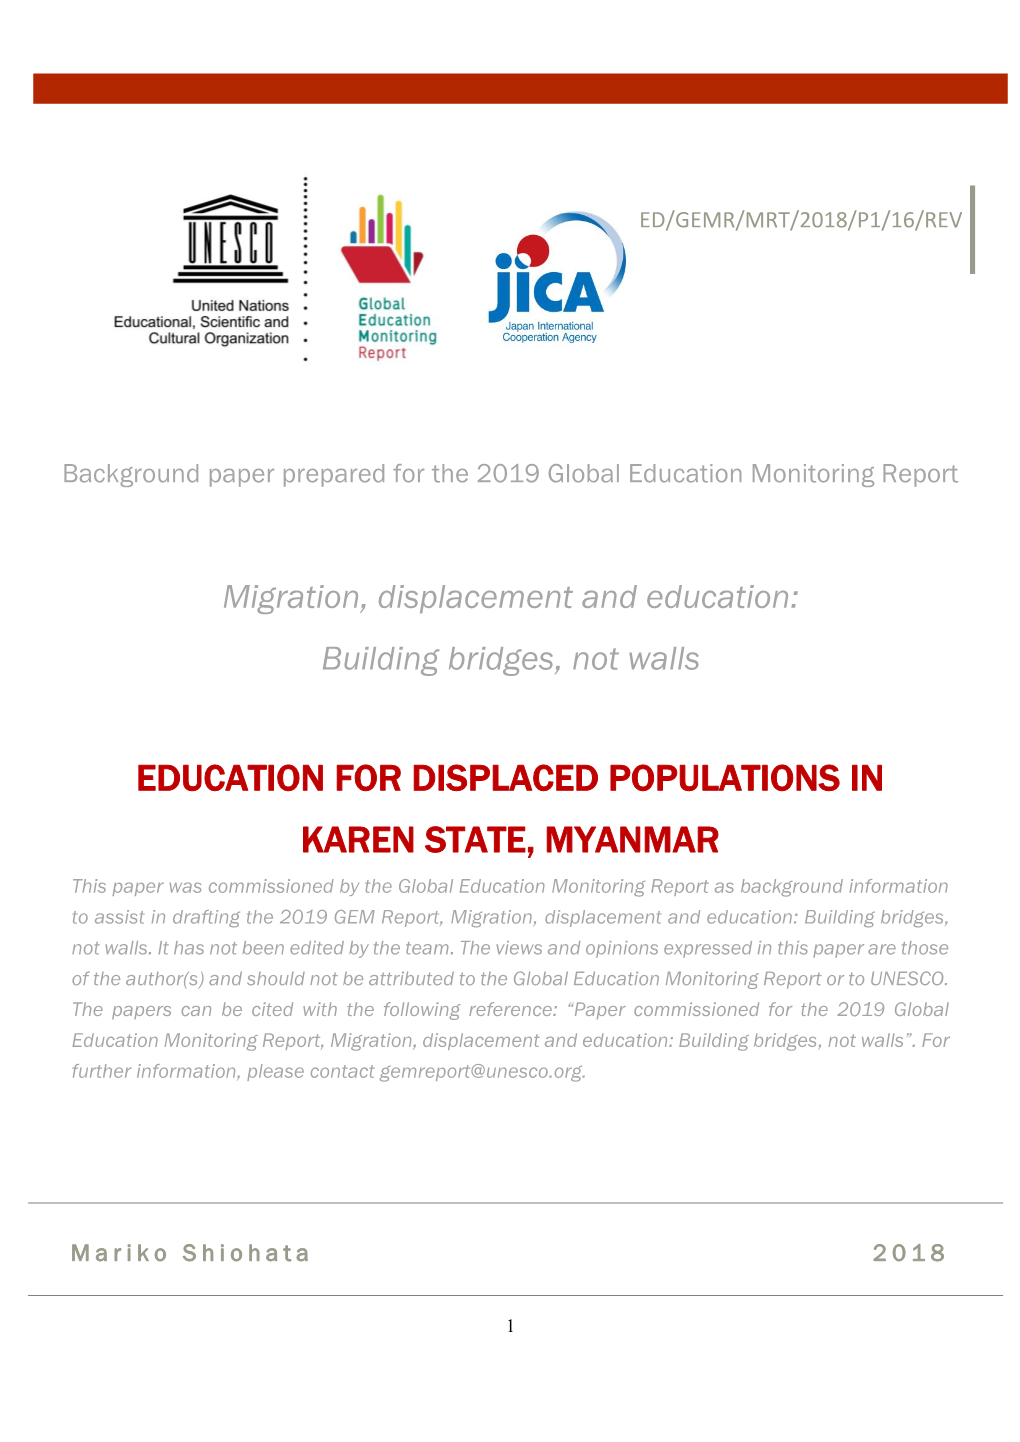 Education for Displaced Populations in Karen State, Myanmar